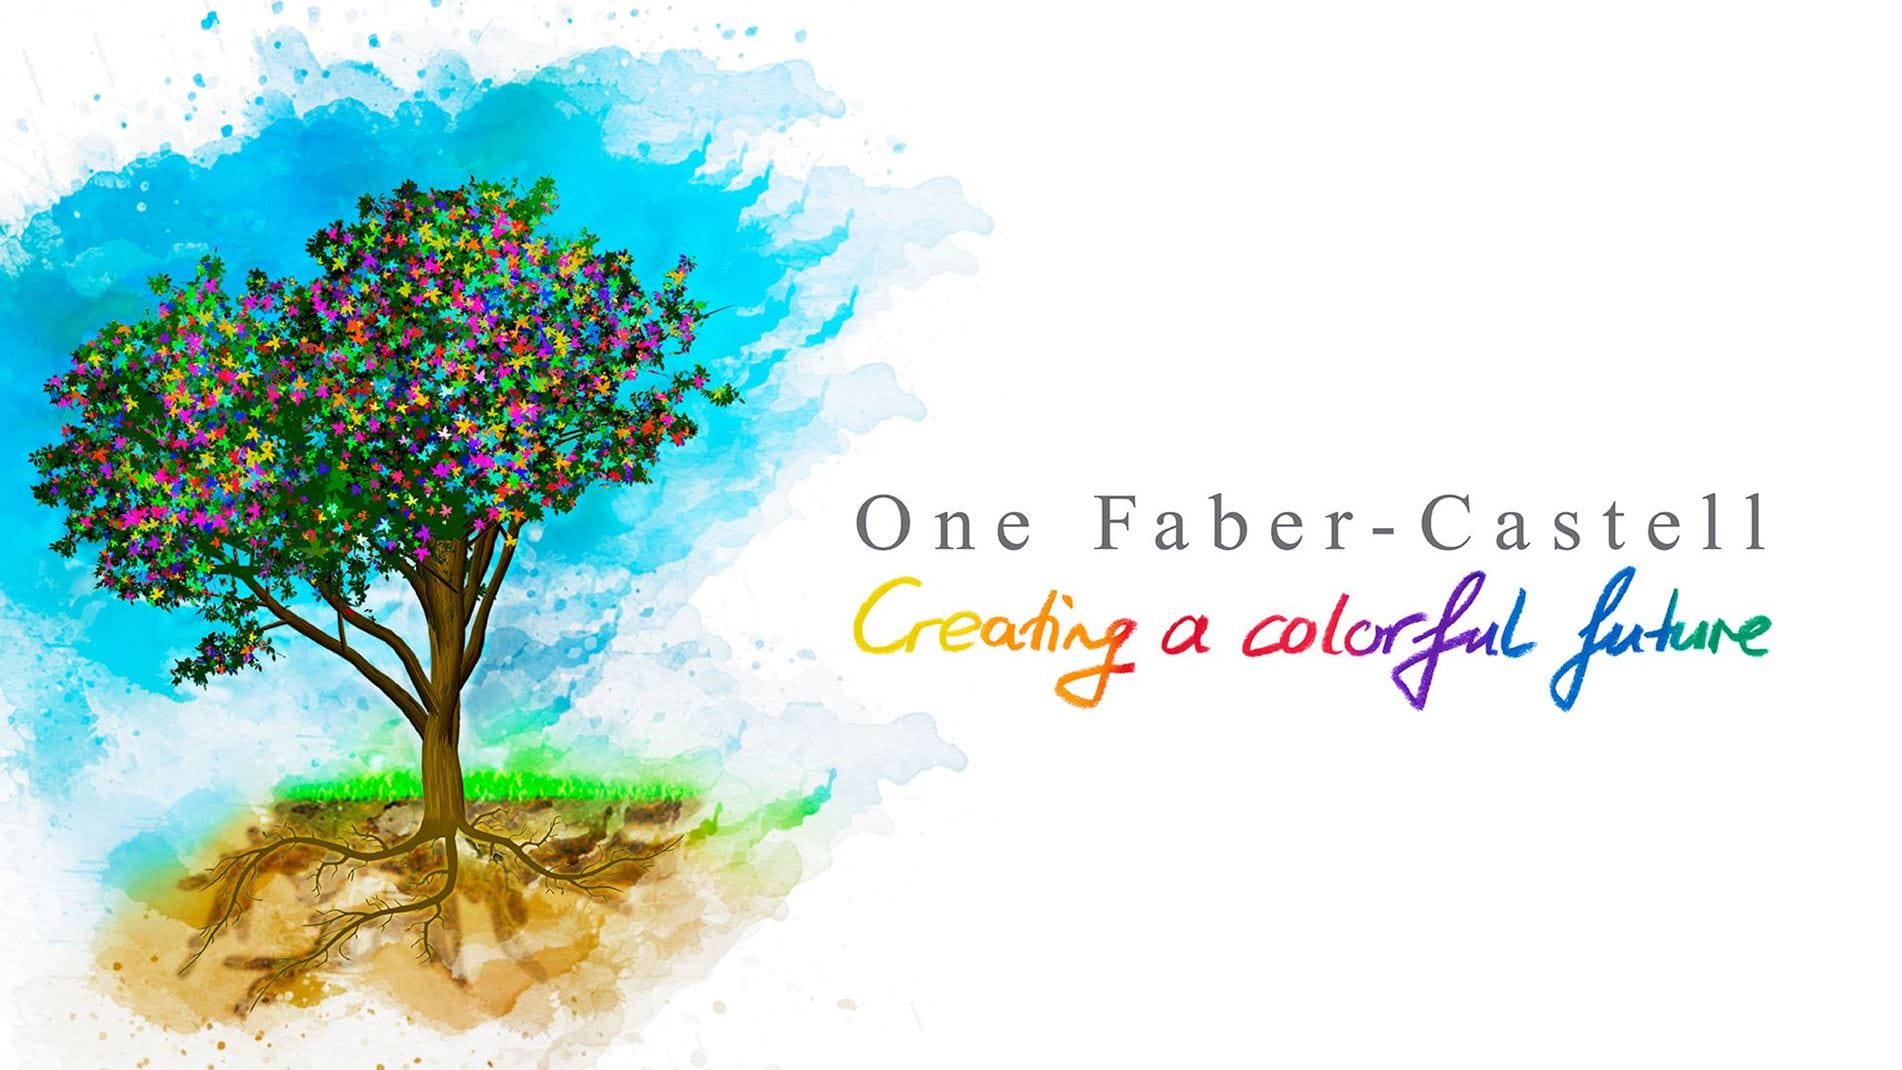 Baum mit Schriftzug "One Faber-Castell – Creating a colorful future"